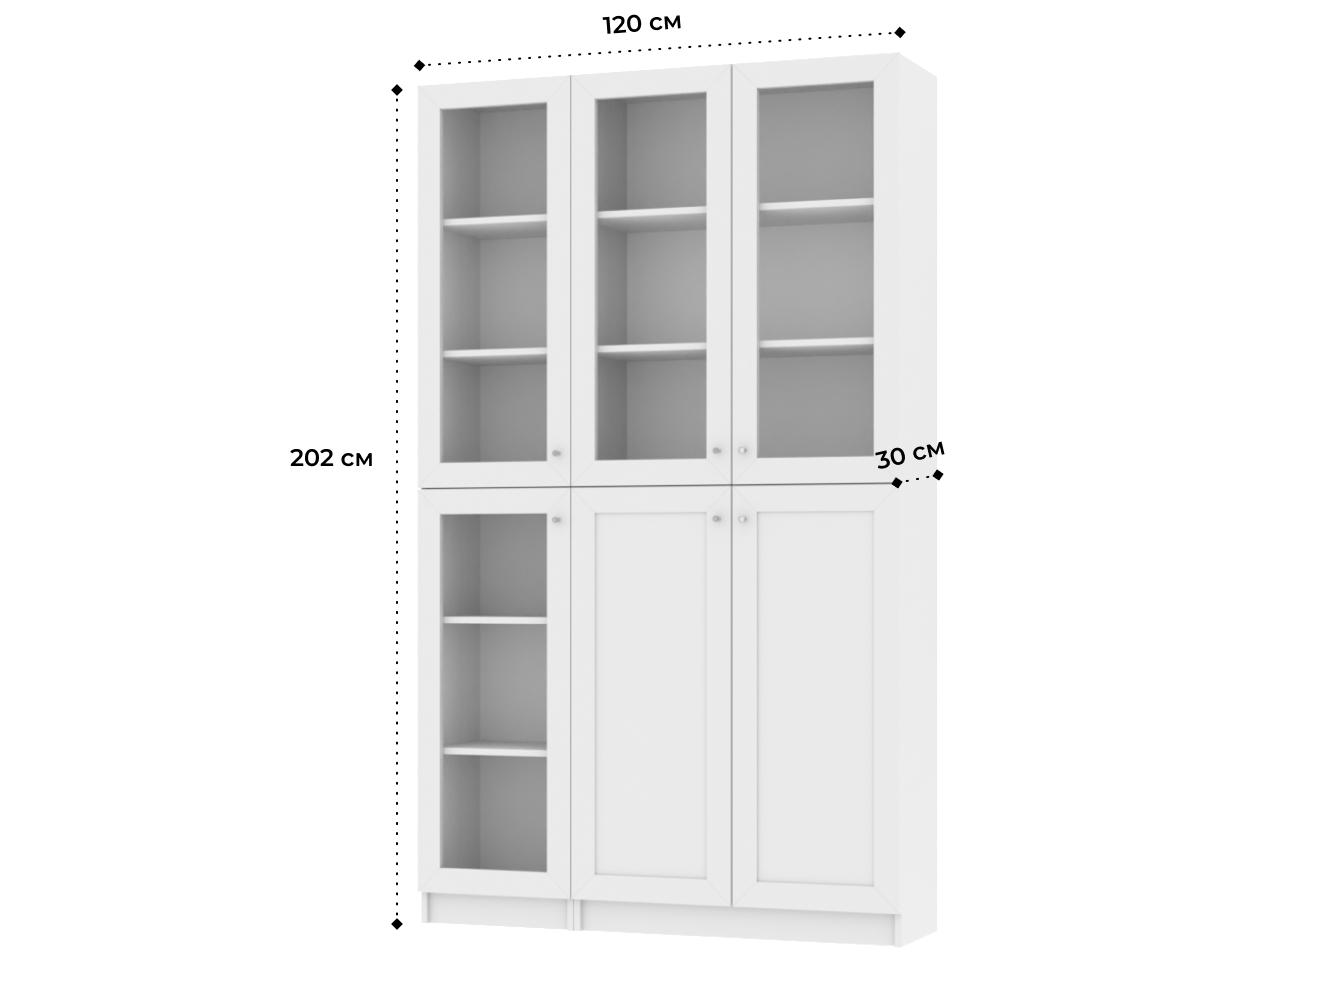  Книжный шкаф Билли 392 white desire ИКЕА (IKEA) изображение товара